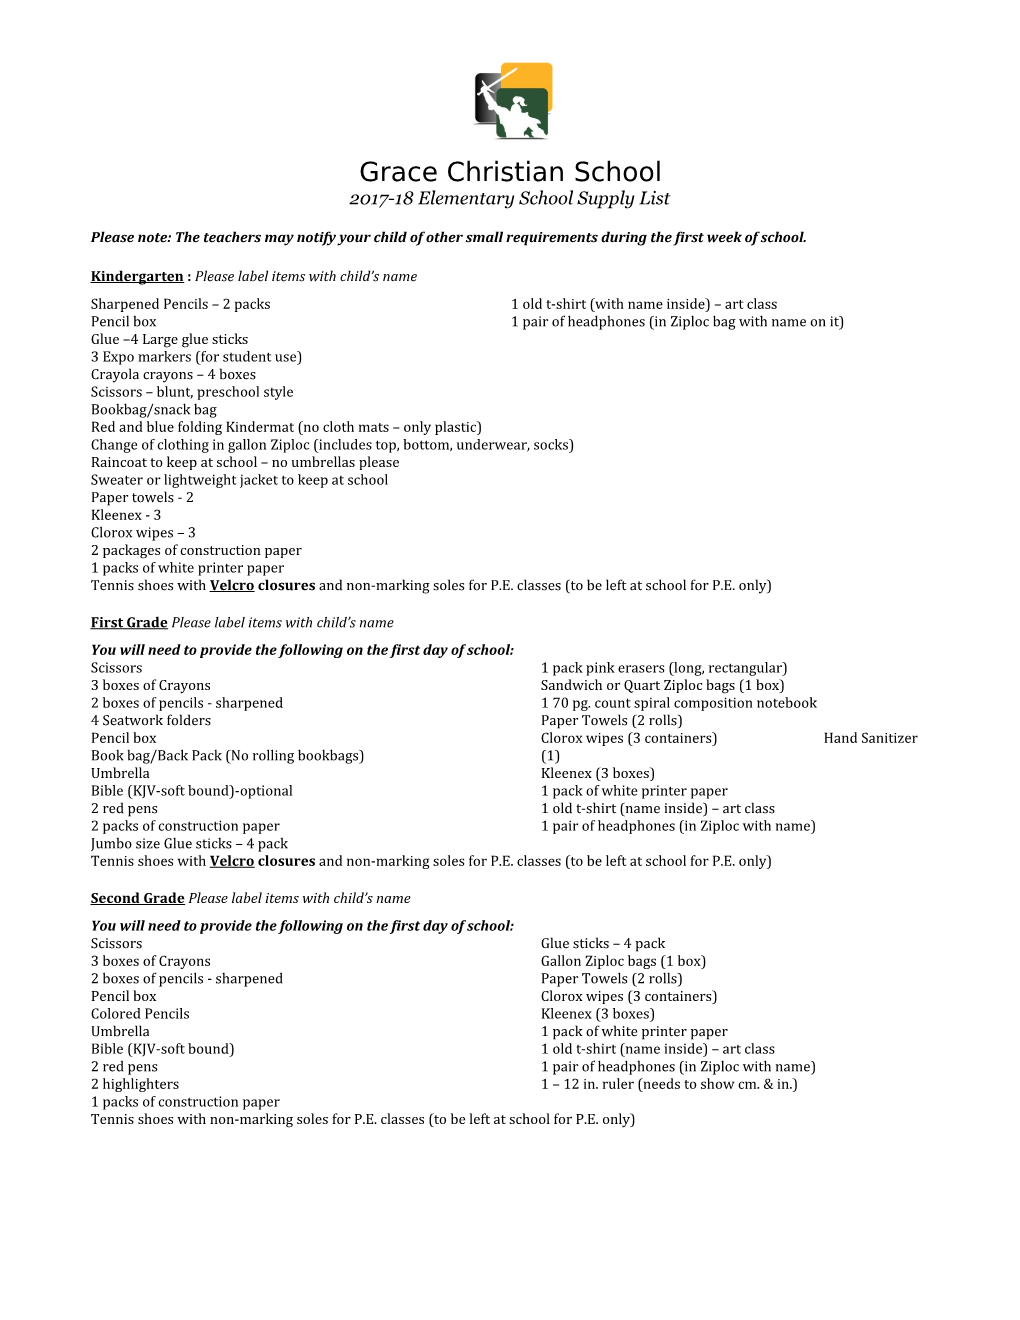 Grace Christian School * Elementary Student Supply List